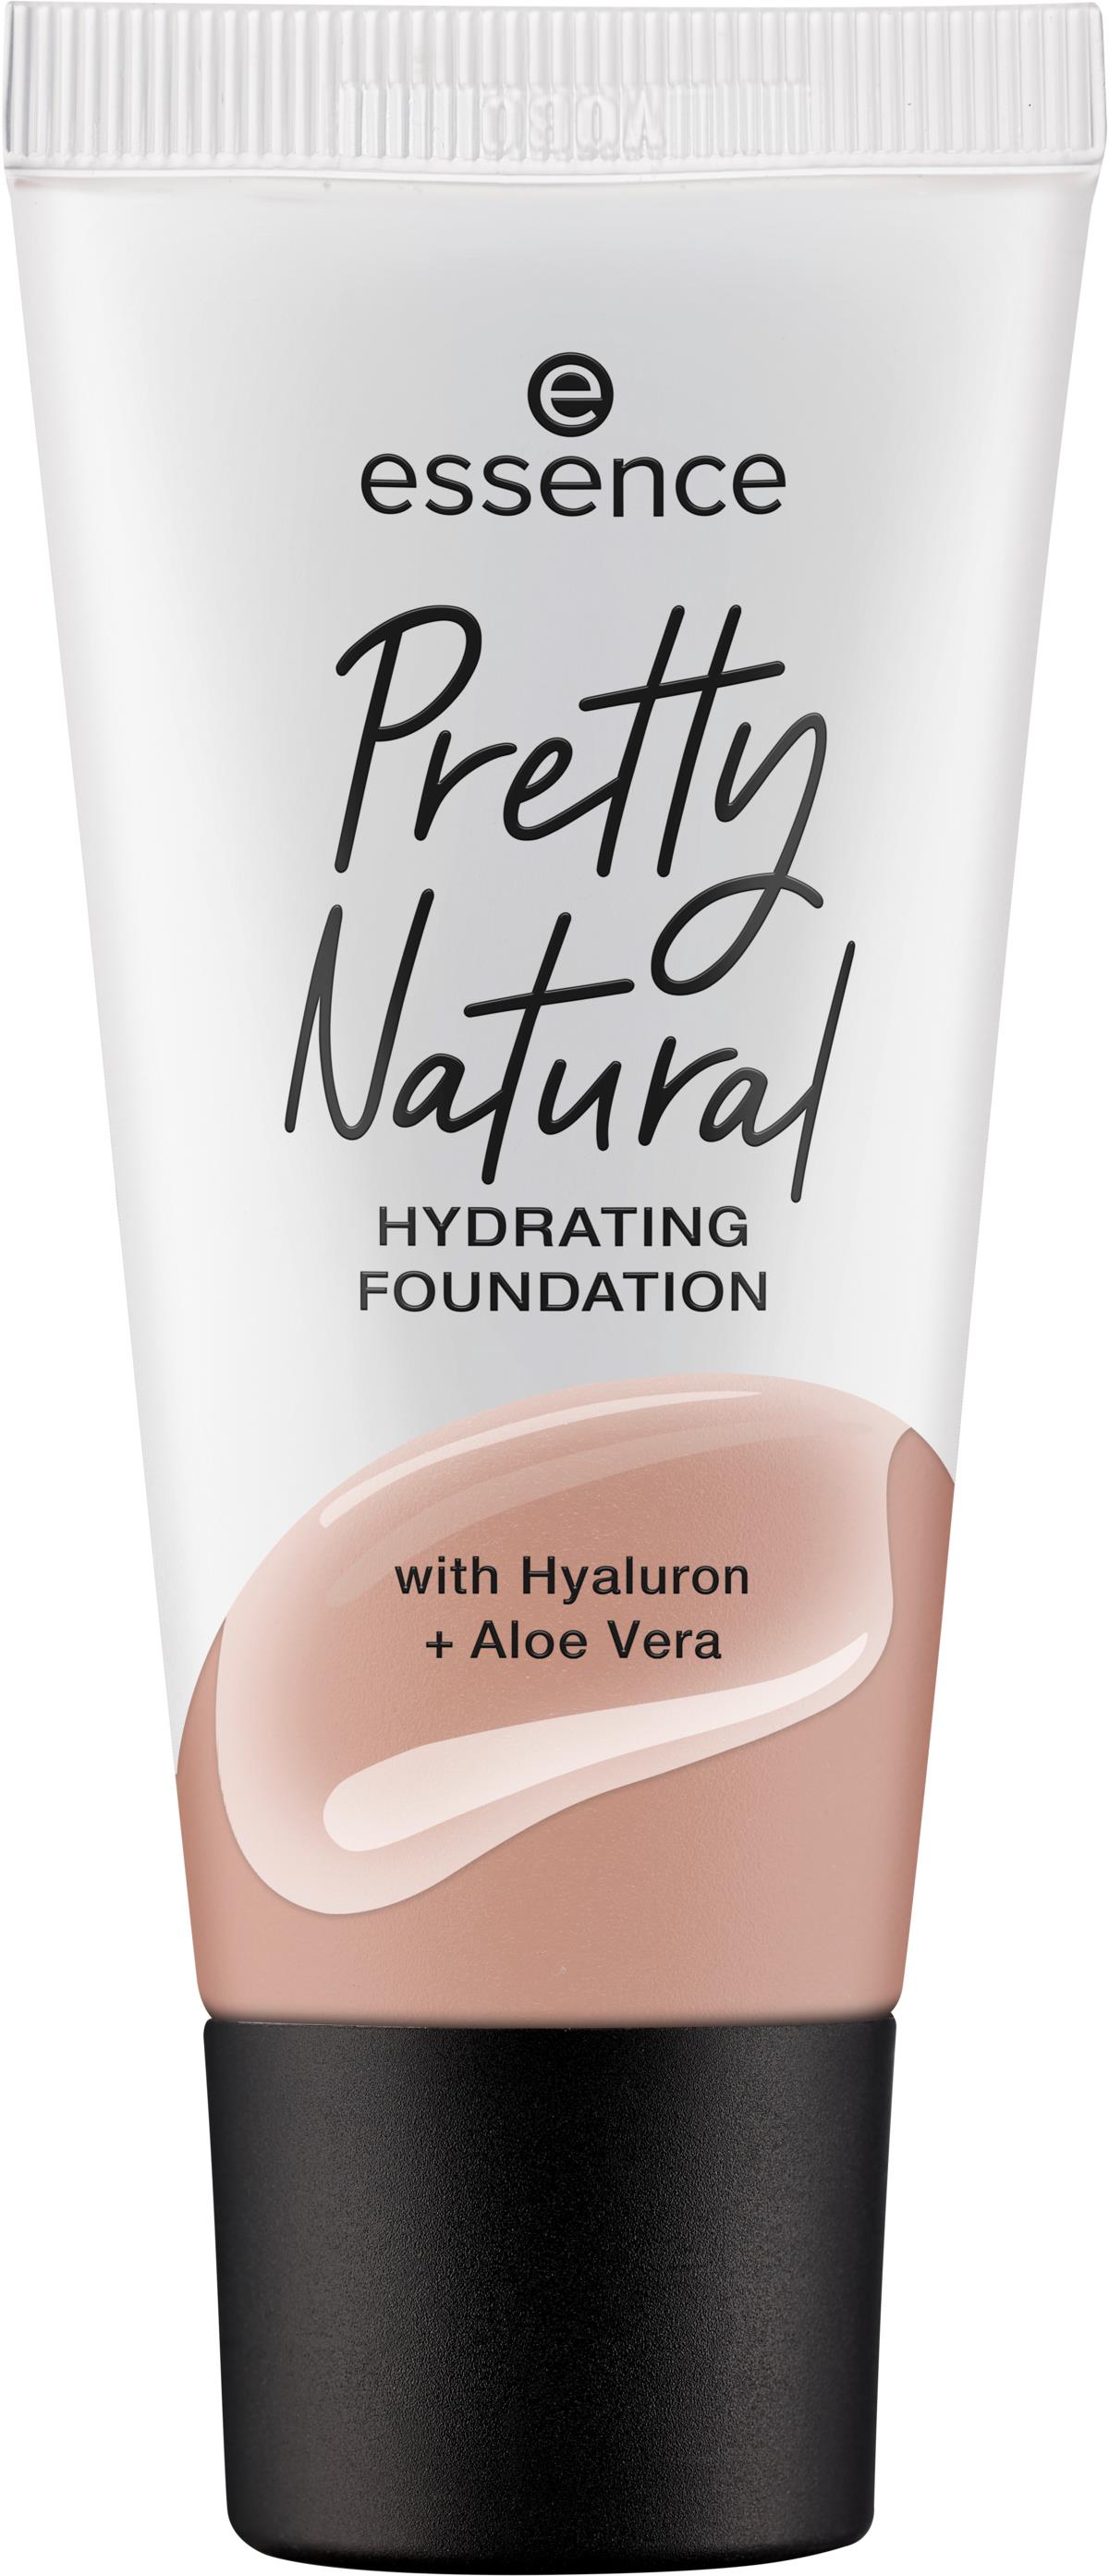 foundation pretty 190 natural hydrating essence